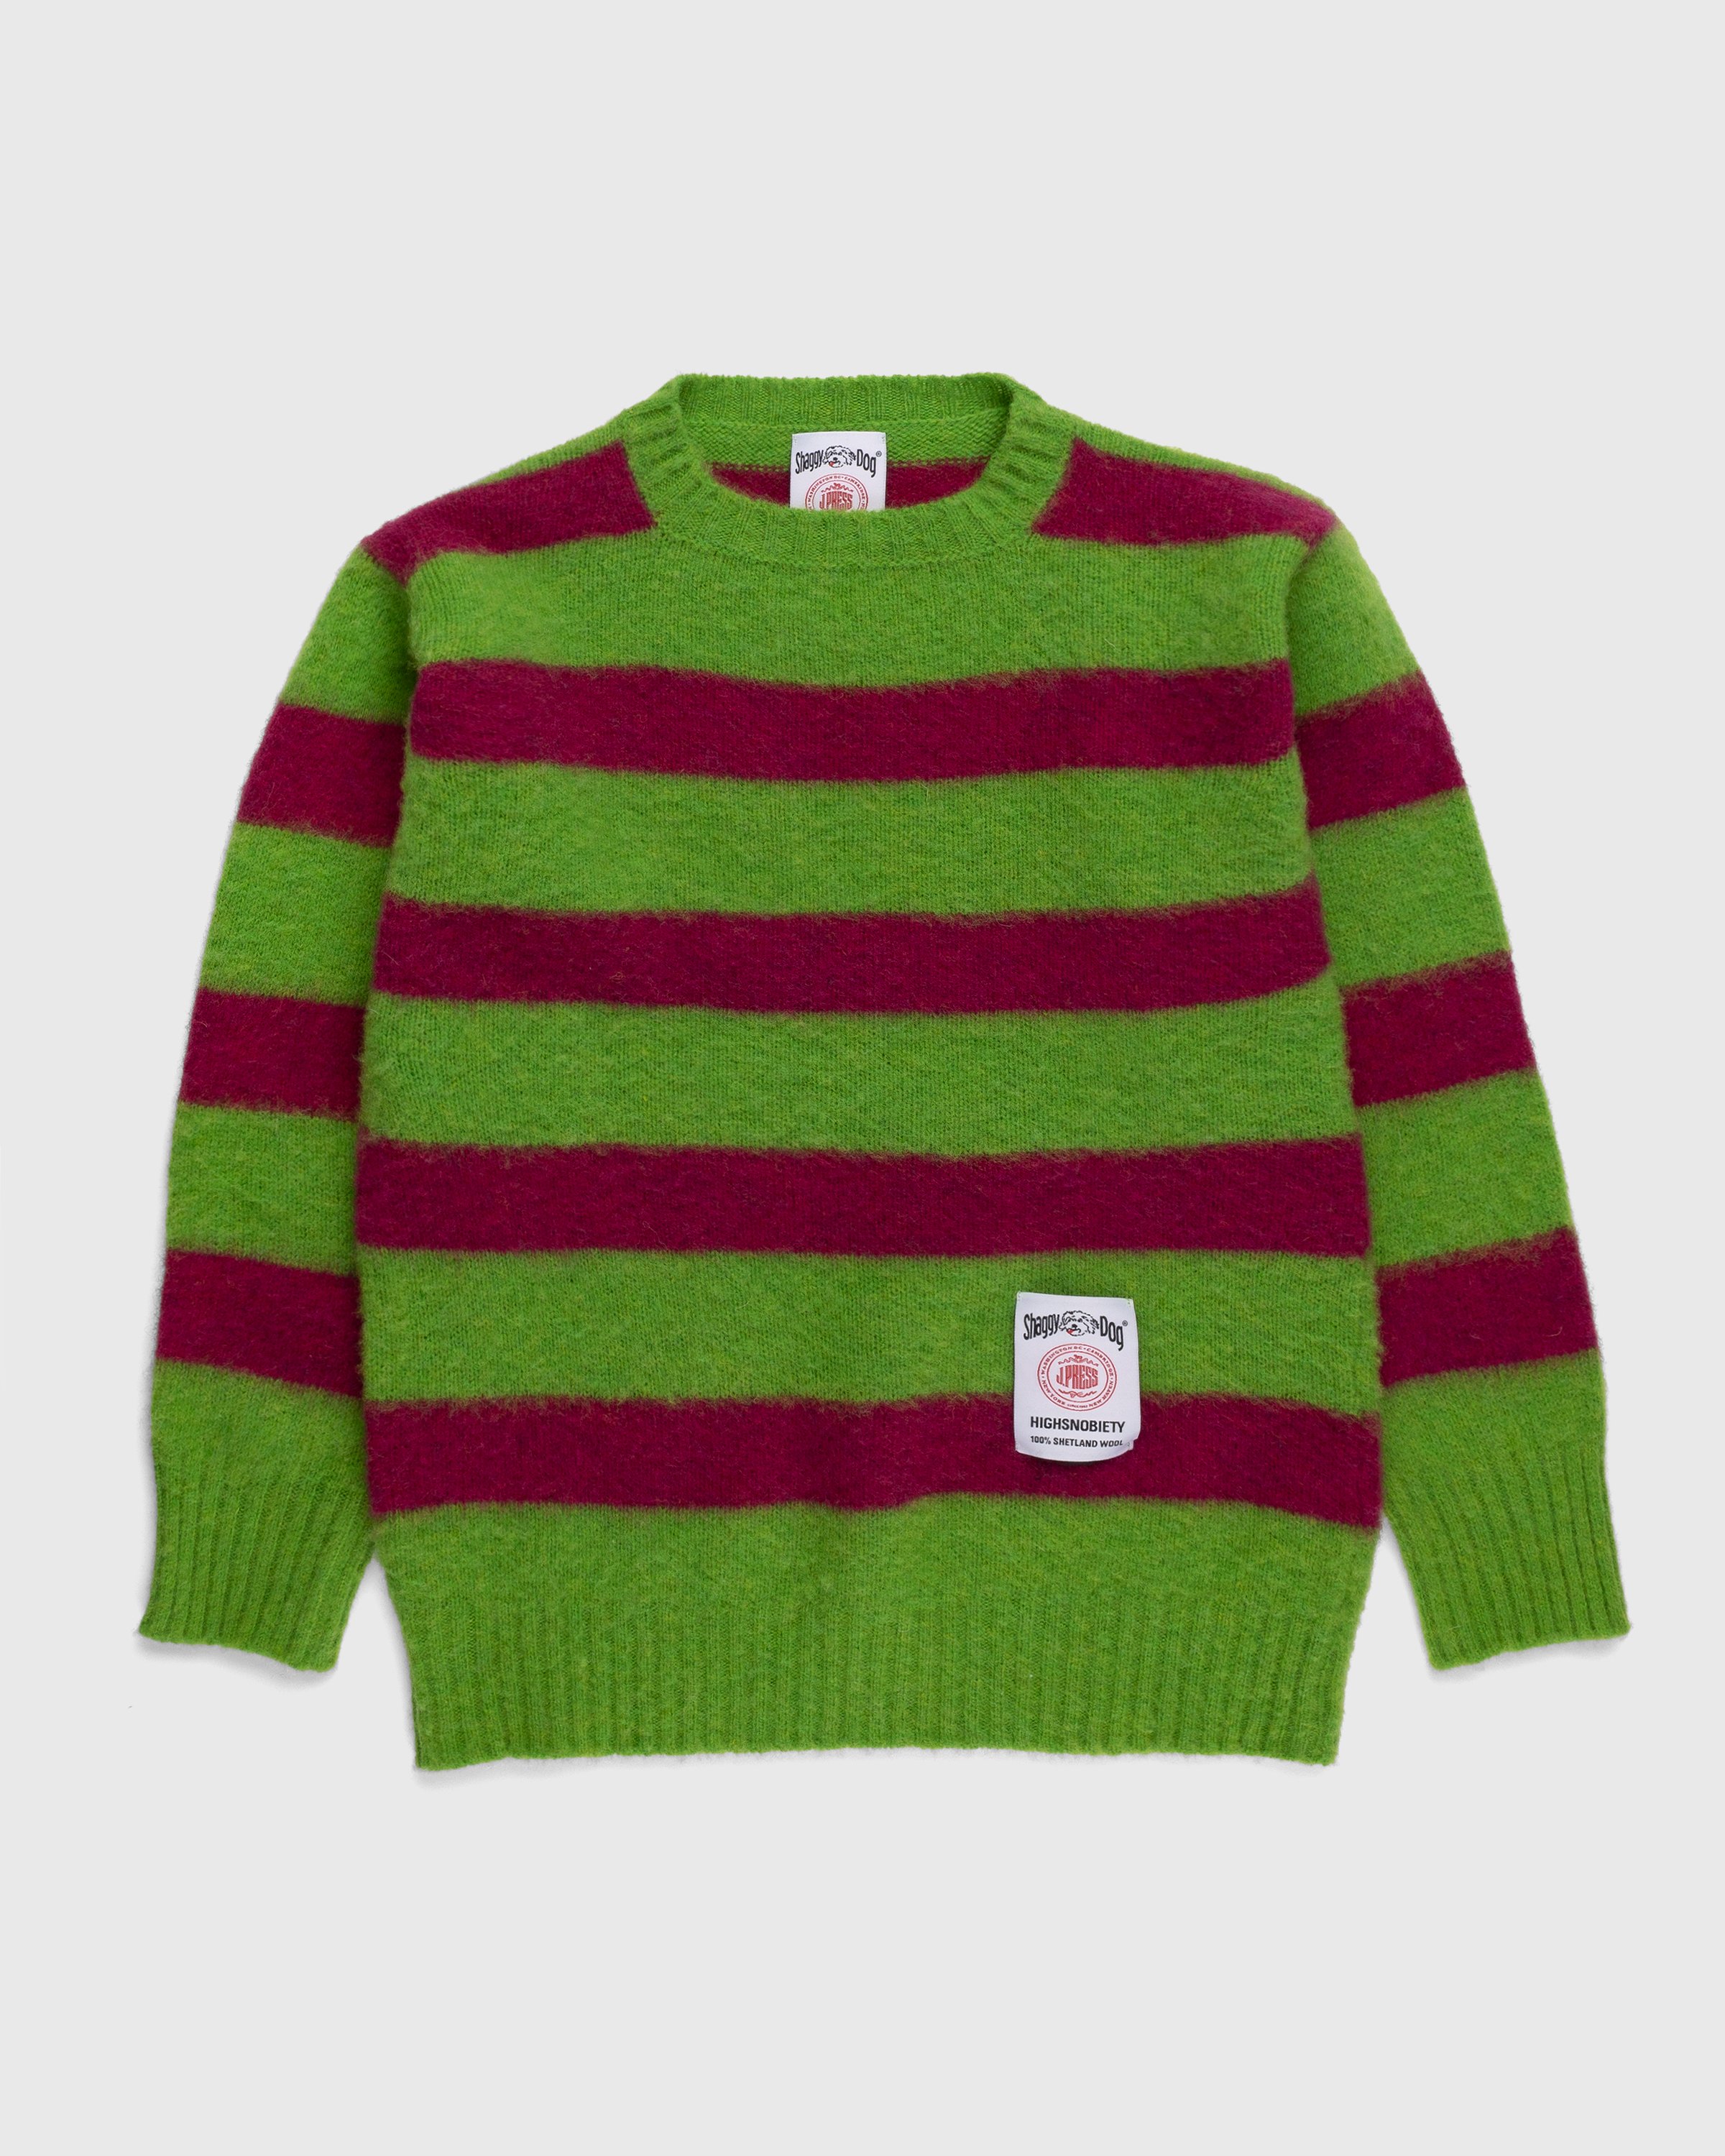 J. Press x Highsnobiety - Shaggy Dog Stripe Sweater Multi - Clothing - Multi - Image 1